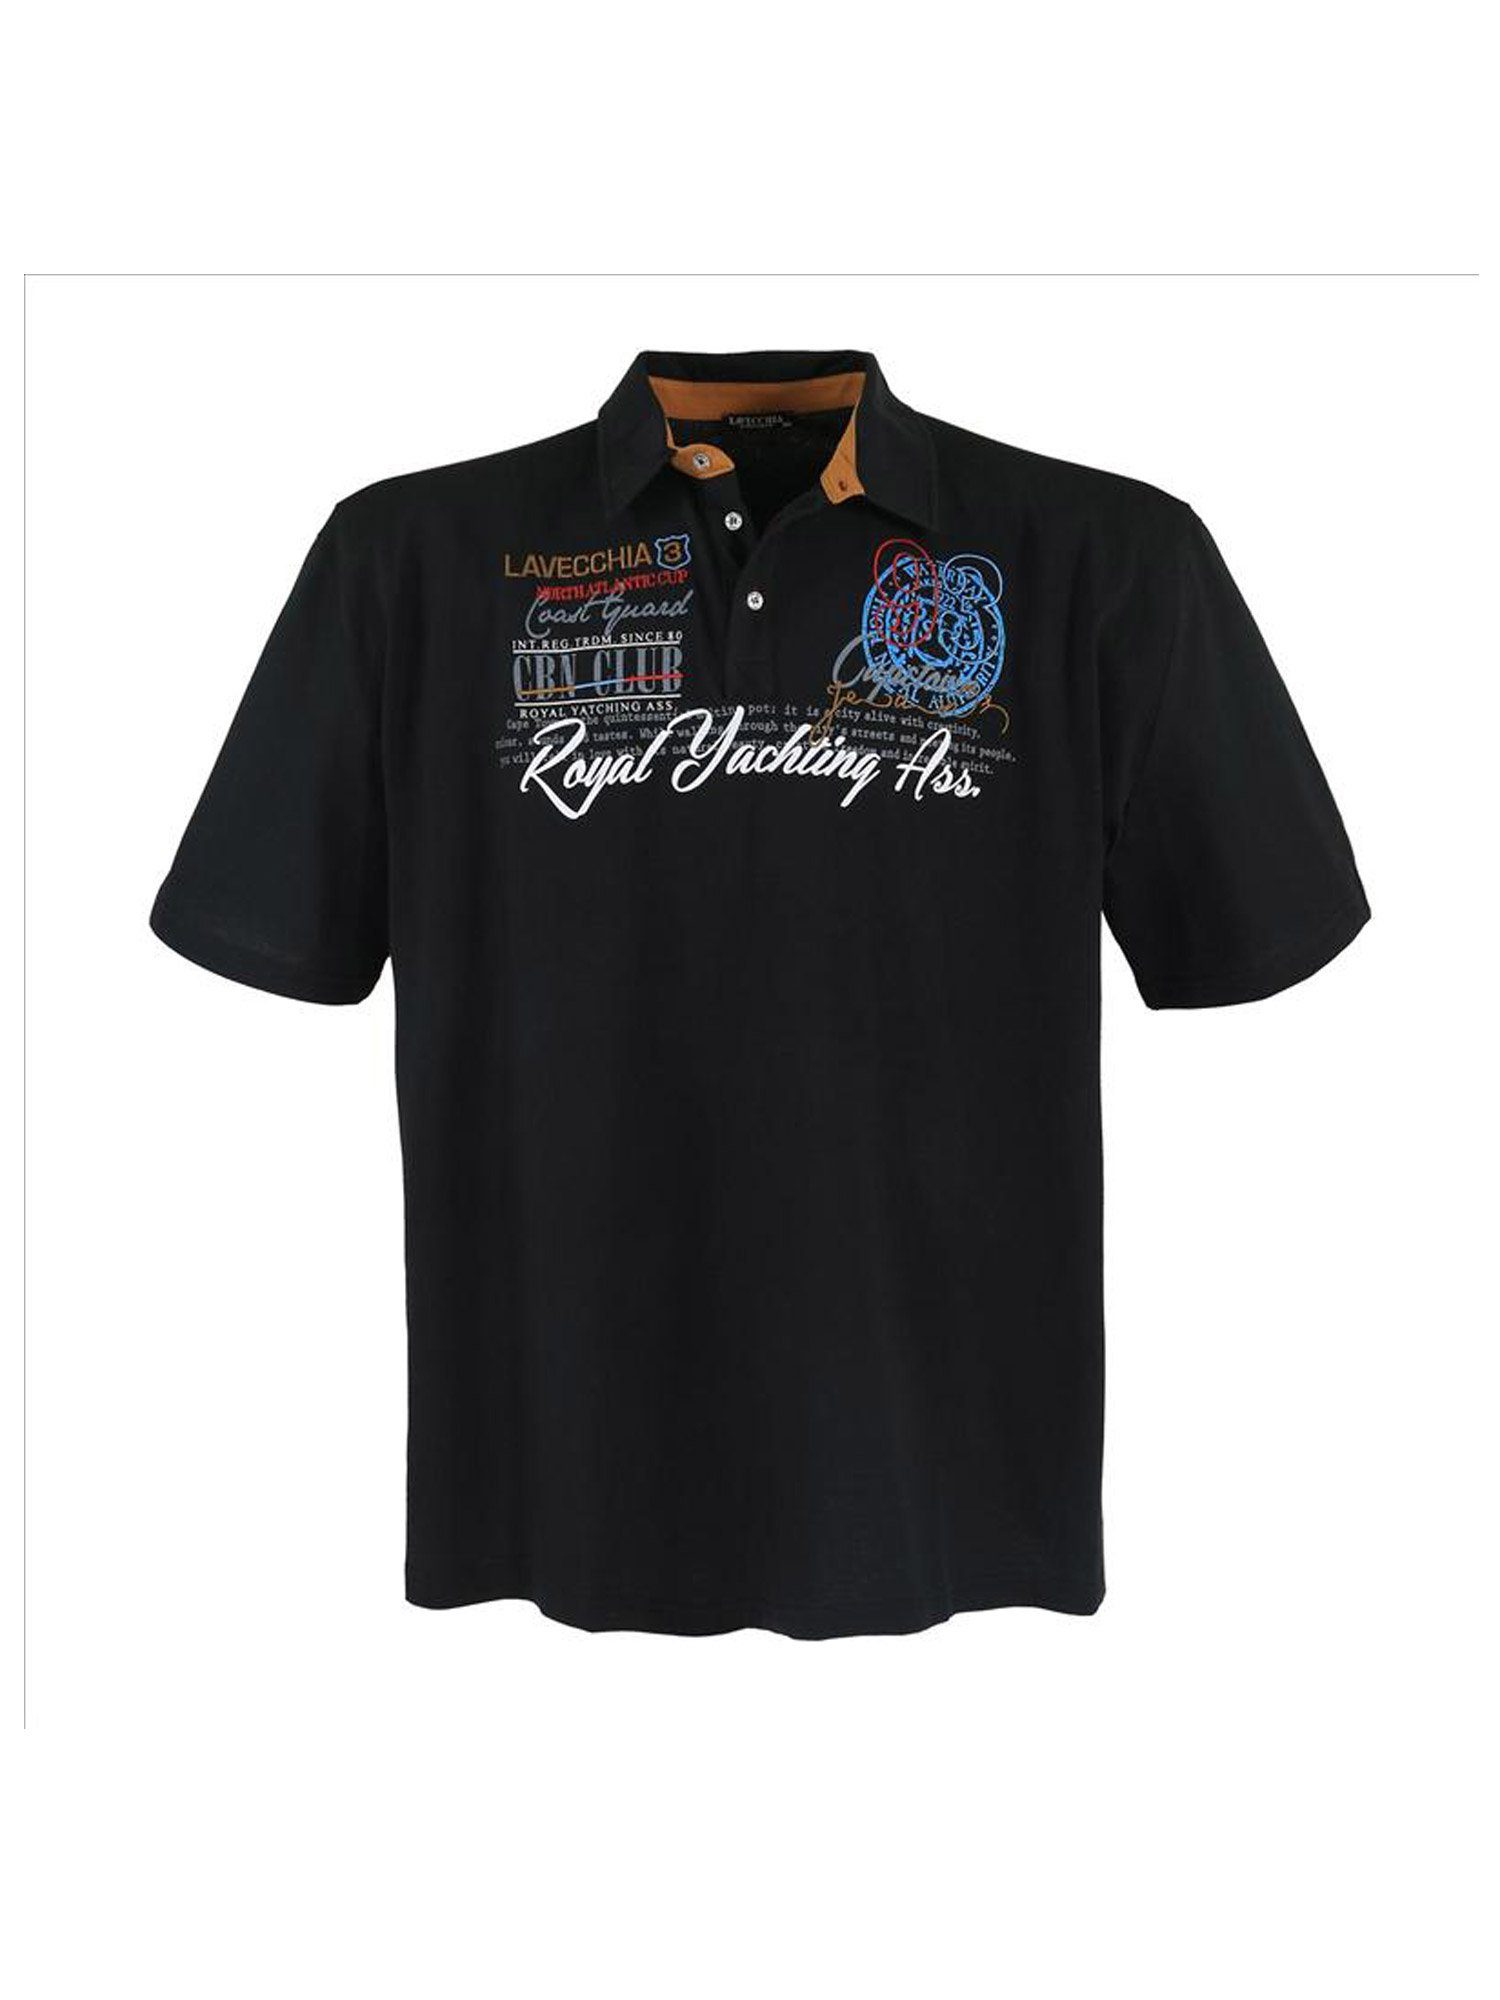 Lavecchia Poloshirt Übergrößen Herren Polo Shirt LV-4688 Herren Polo Shirt schwarz